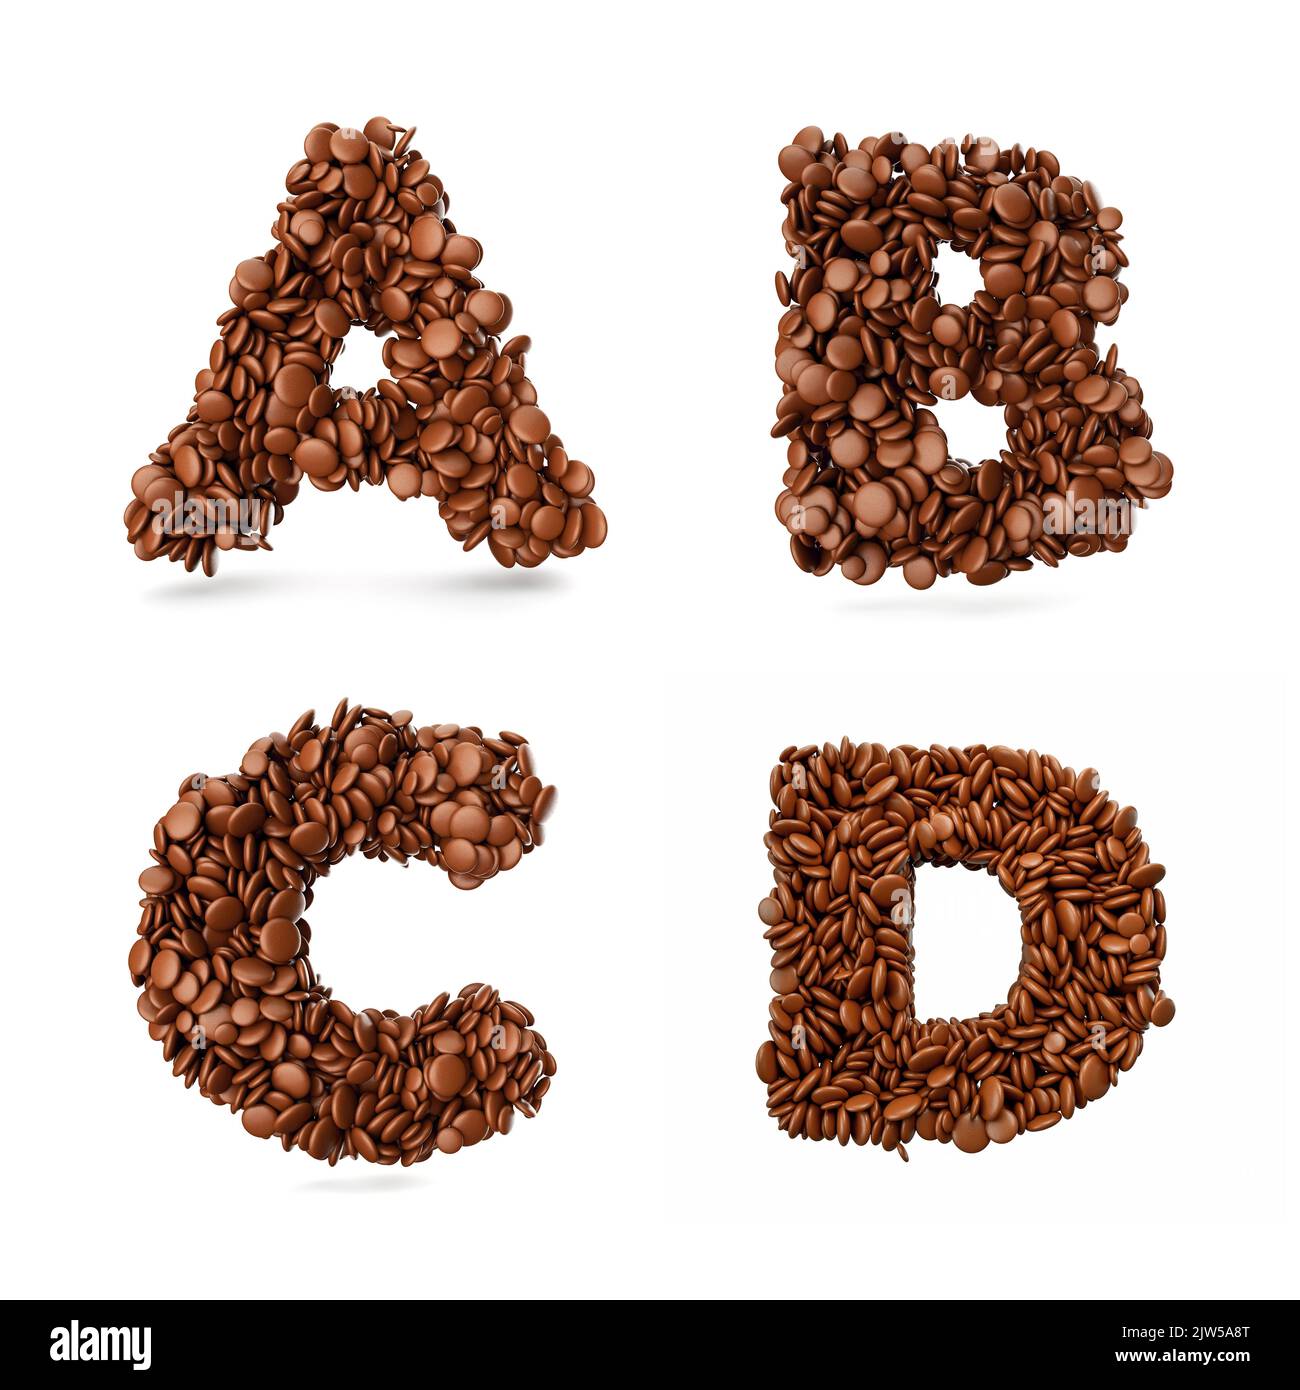 A 3D Darstellung der Buchstaben A B C D aus schokoladenbeschichteten Bohnen Stockfoto